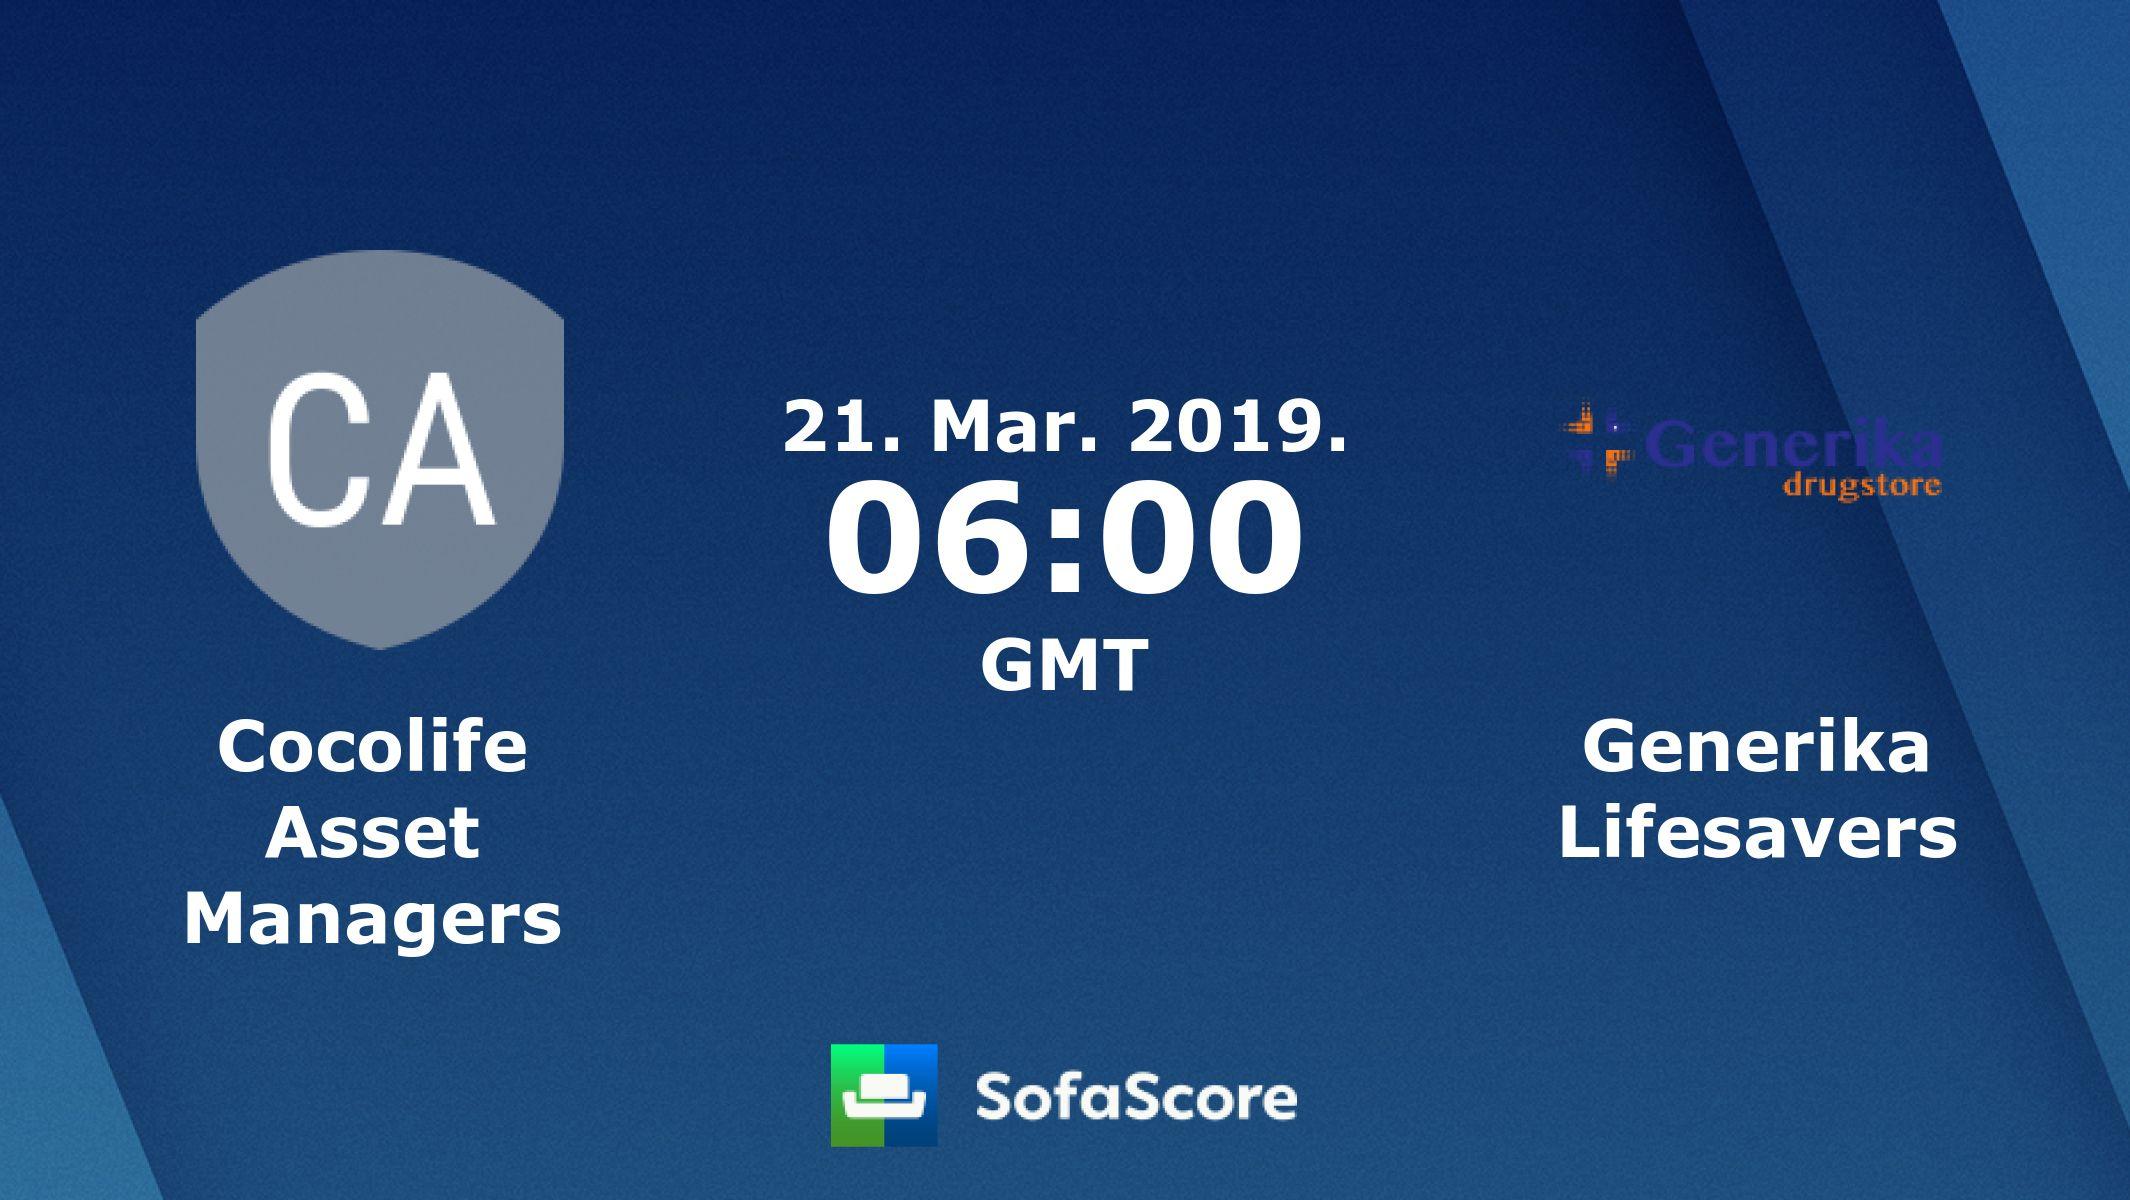 Cocolife Logo - Cocolife Asset Managers Generika Lifesavers live score, video stream ...